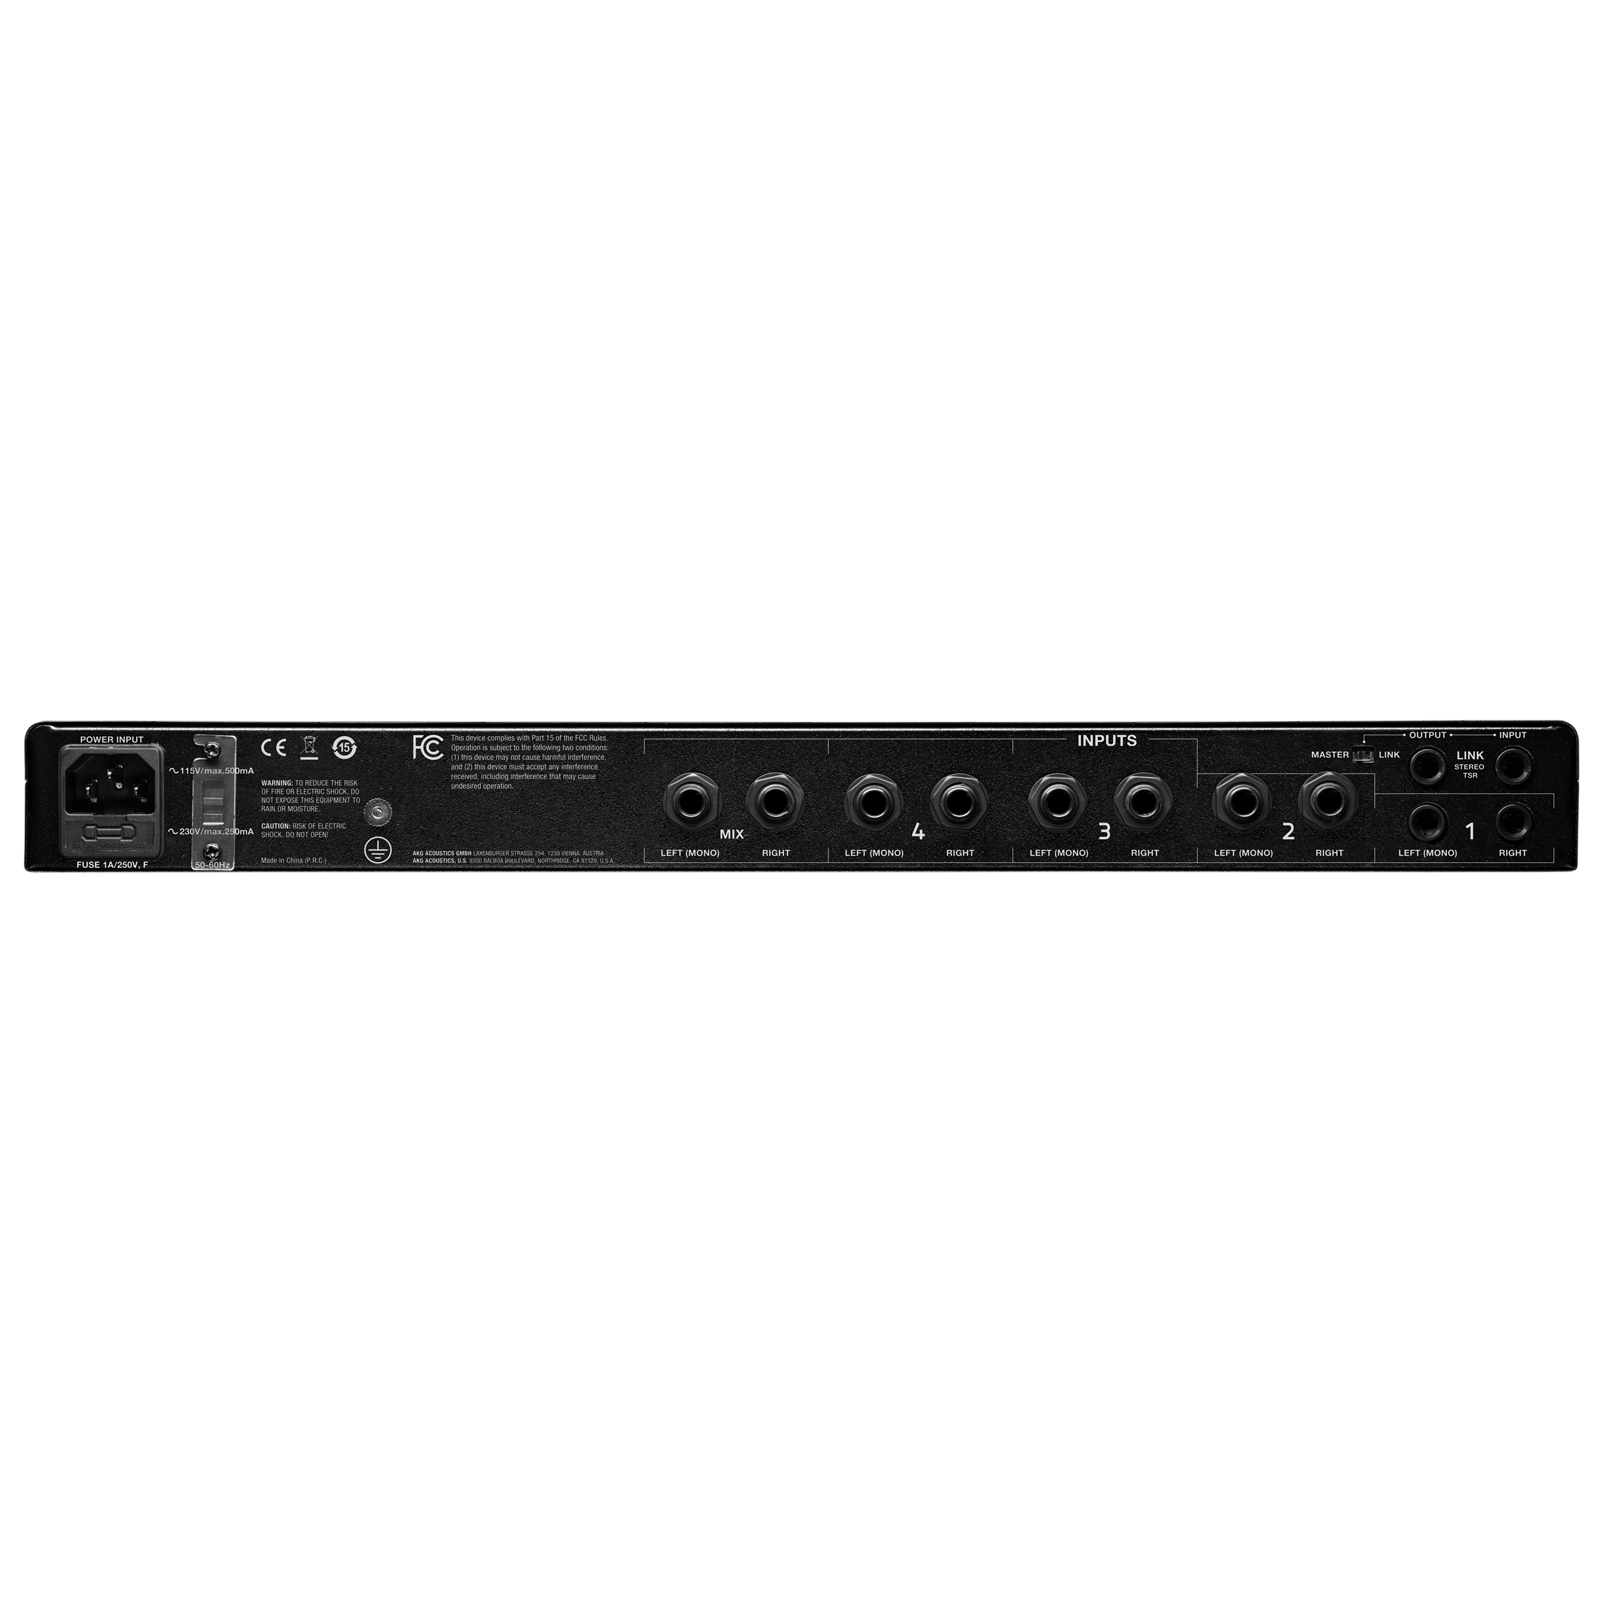 HP6E - Black - 6-channel matrix headphone amplifier - Back